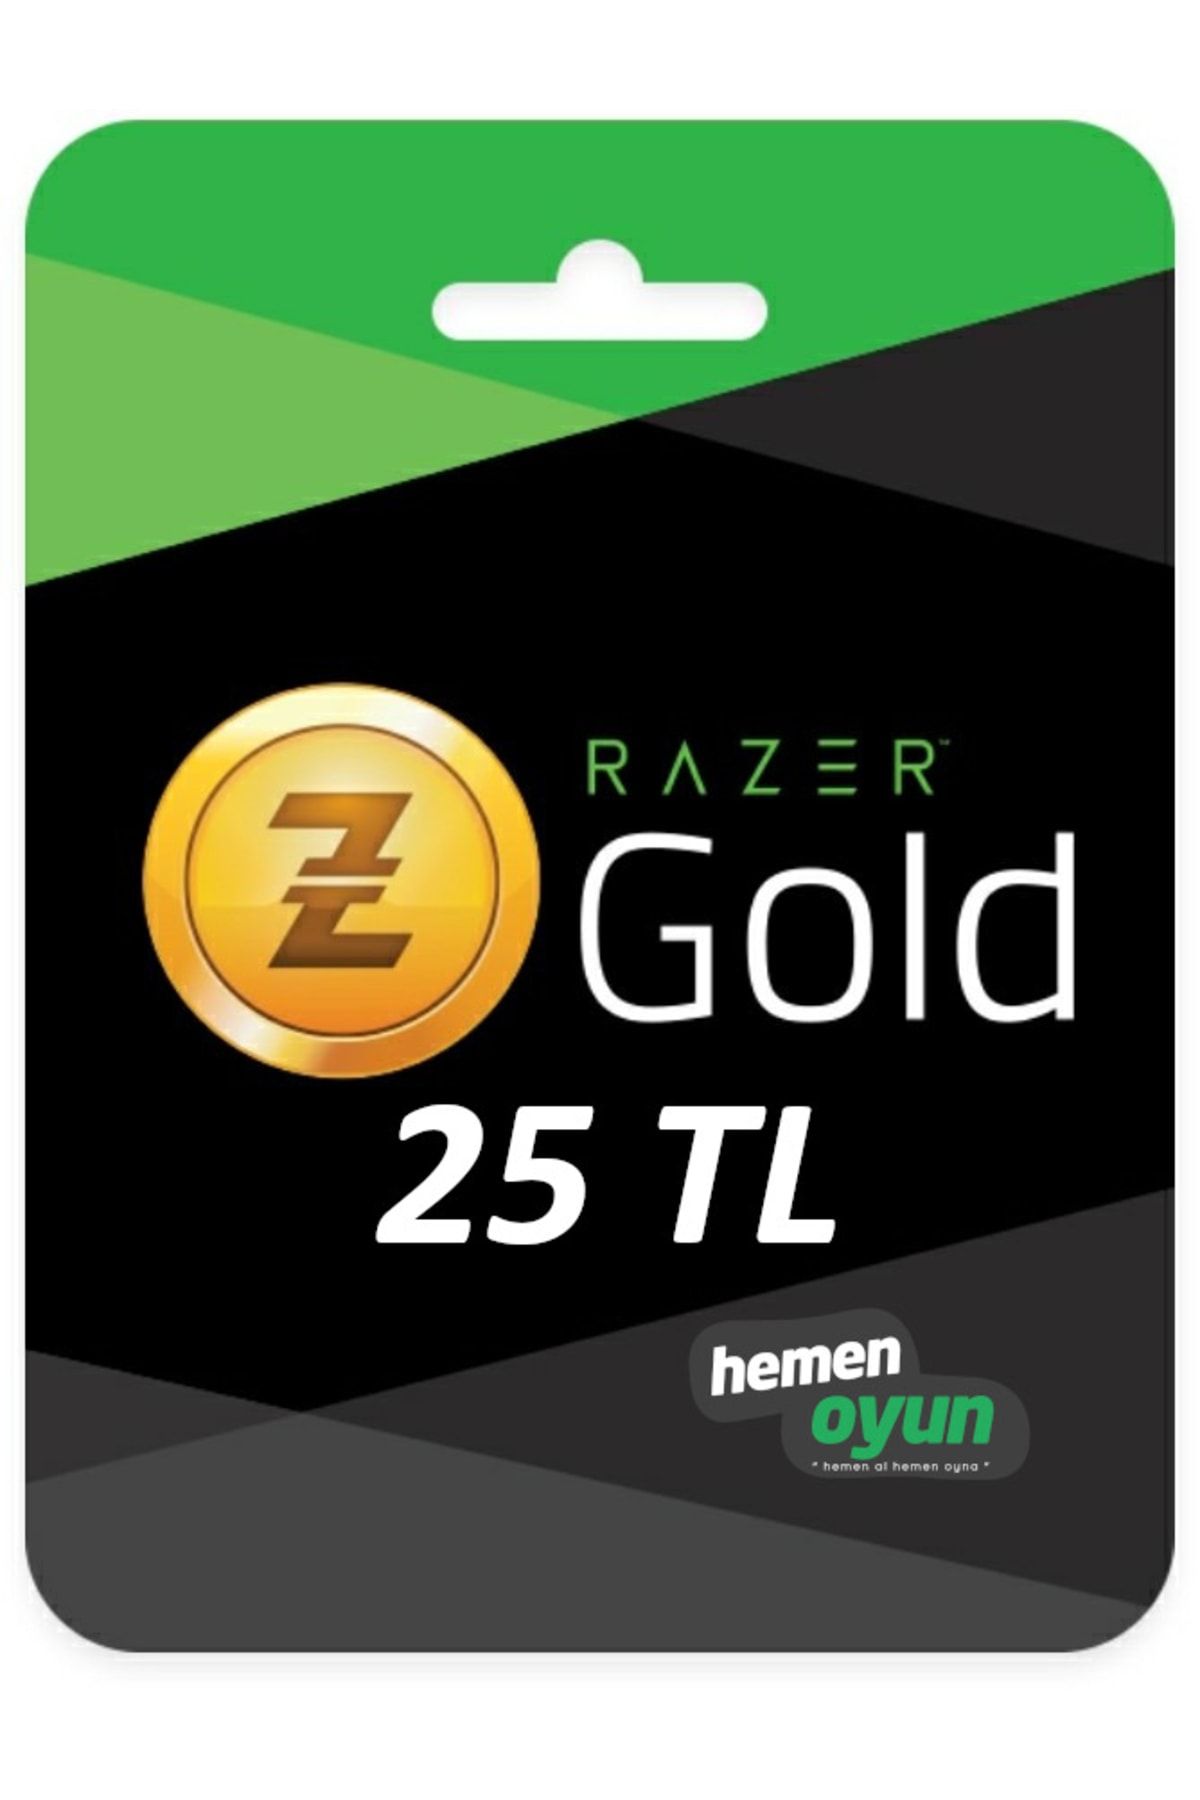 hemenoyun Razer Gold 25 Tl